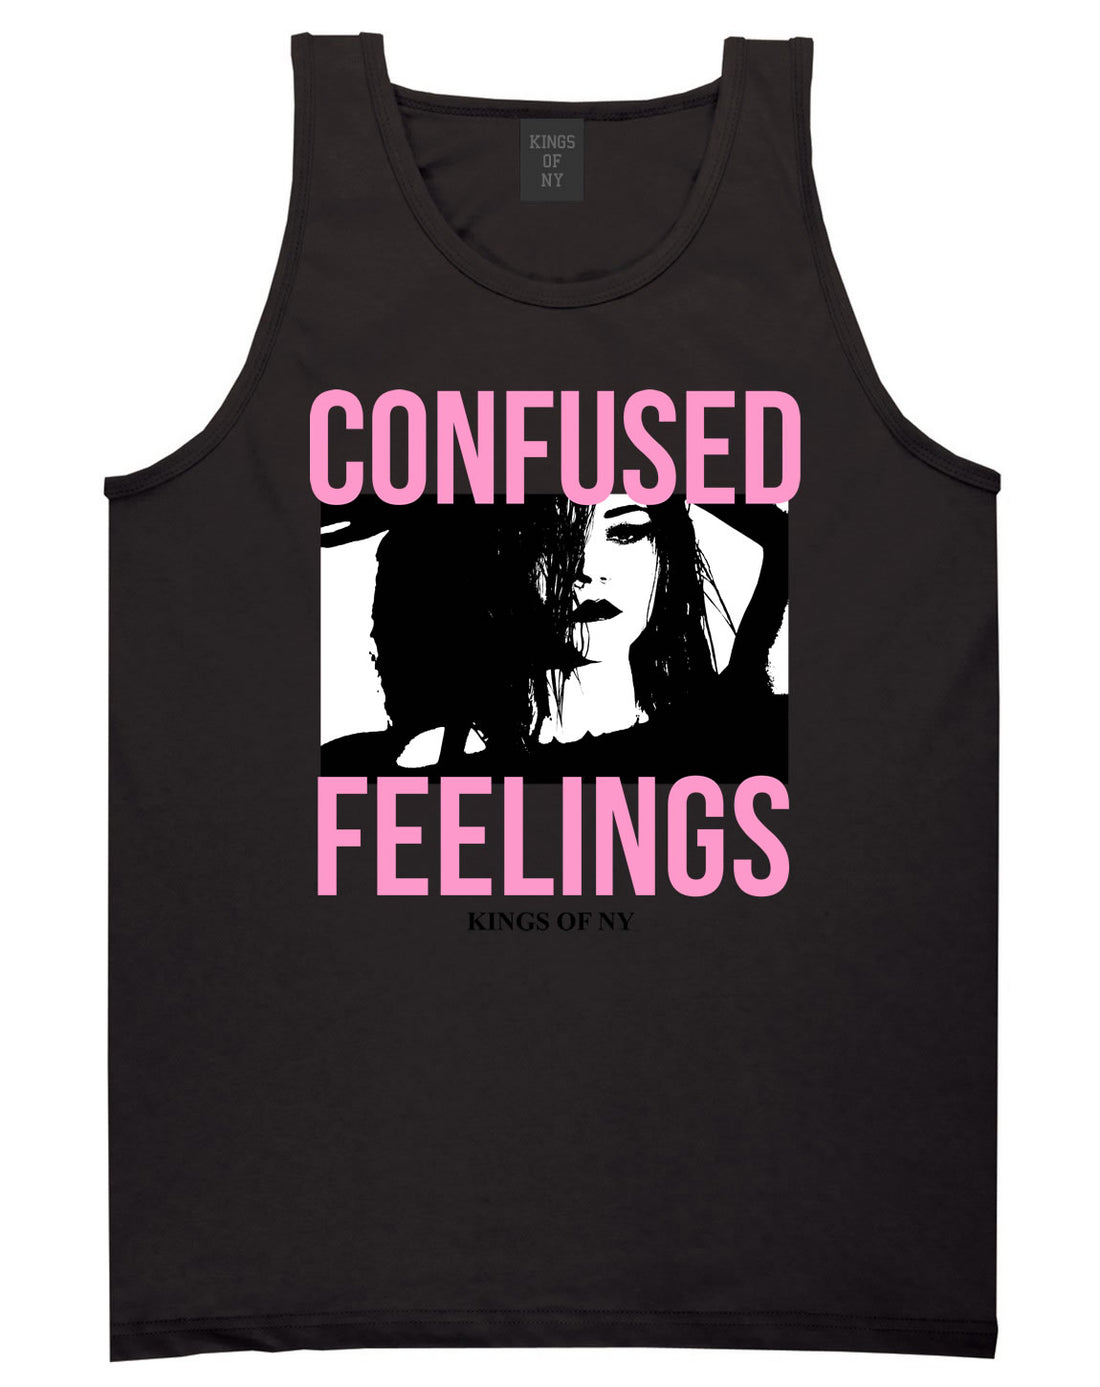 Confused Feelings Mens Tank Top Shirt Black By Kings Of NY